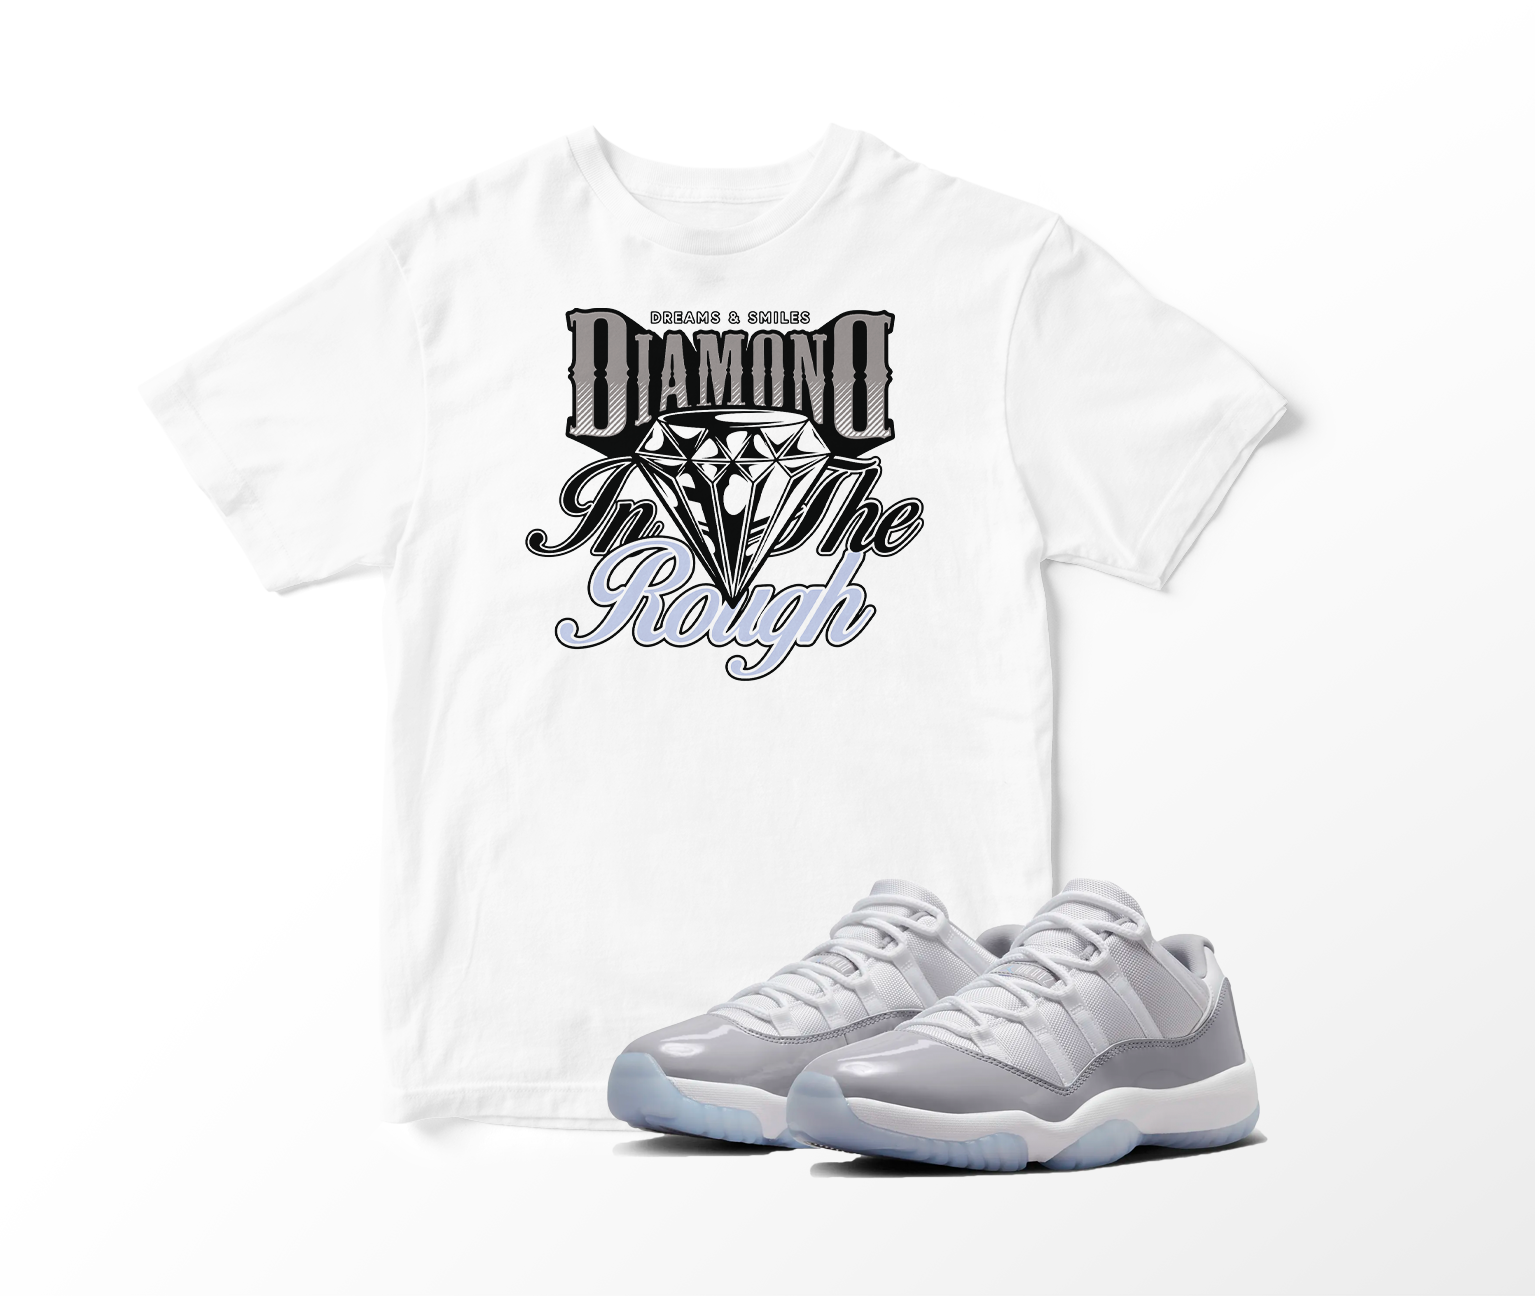 'Diamond In The Rough' Custom Graphic Short Sleeve T-Shirt To Match Air Jordan 11 Low Cool Grey